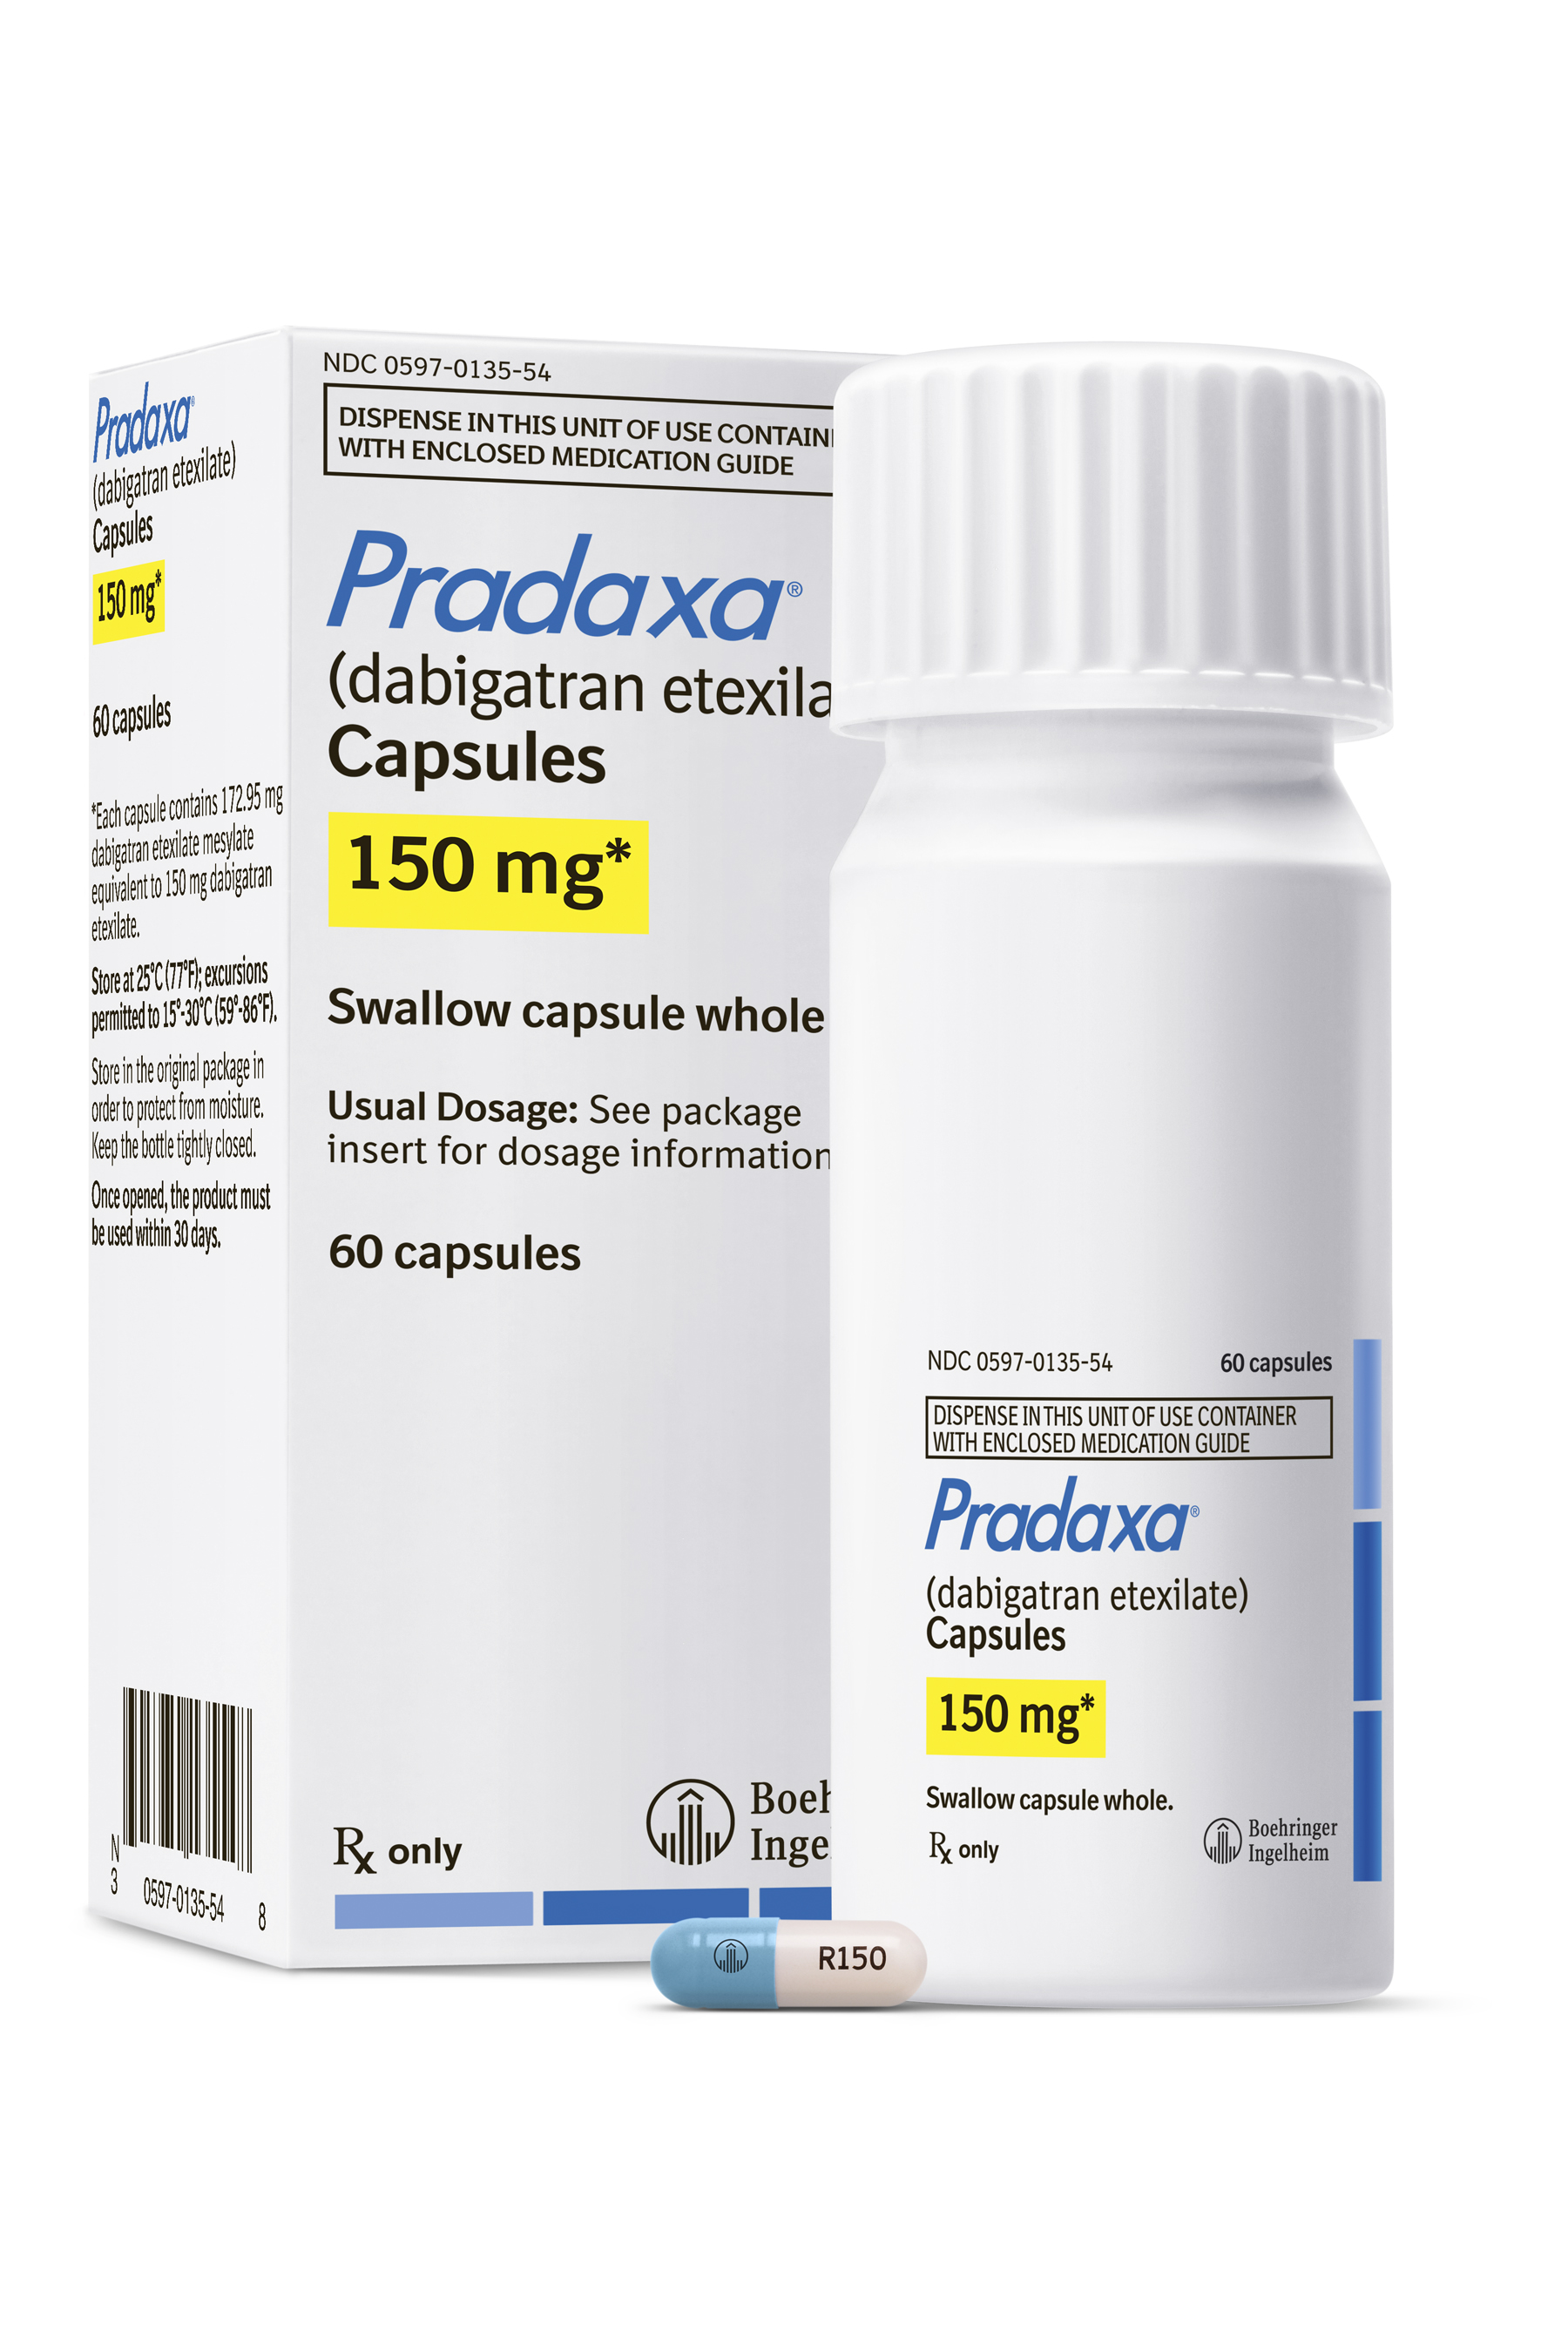 FDA Study Links Pradaxa and Higher GI Bleeding than Warfarin